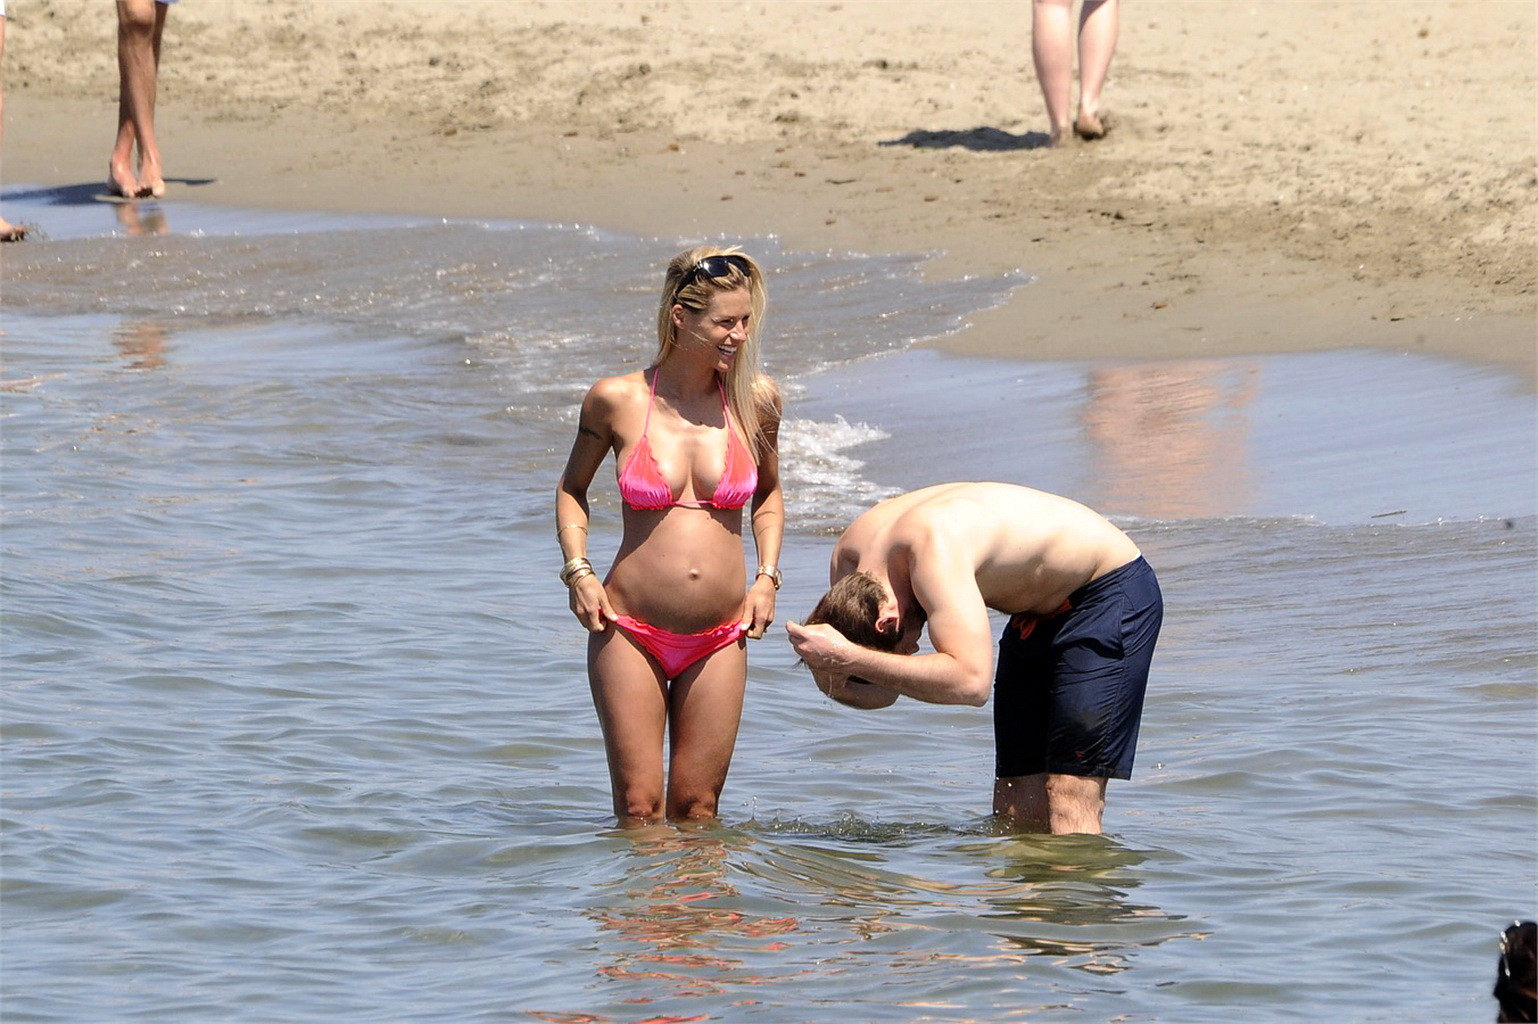 Michelle hunziker embarazada con un bikini en la playa de forte dei marmi, ita
 #75227863